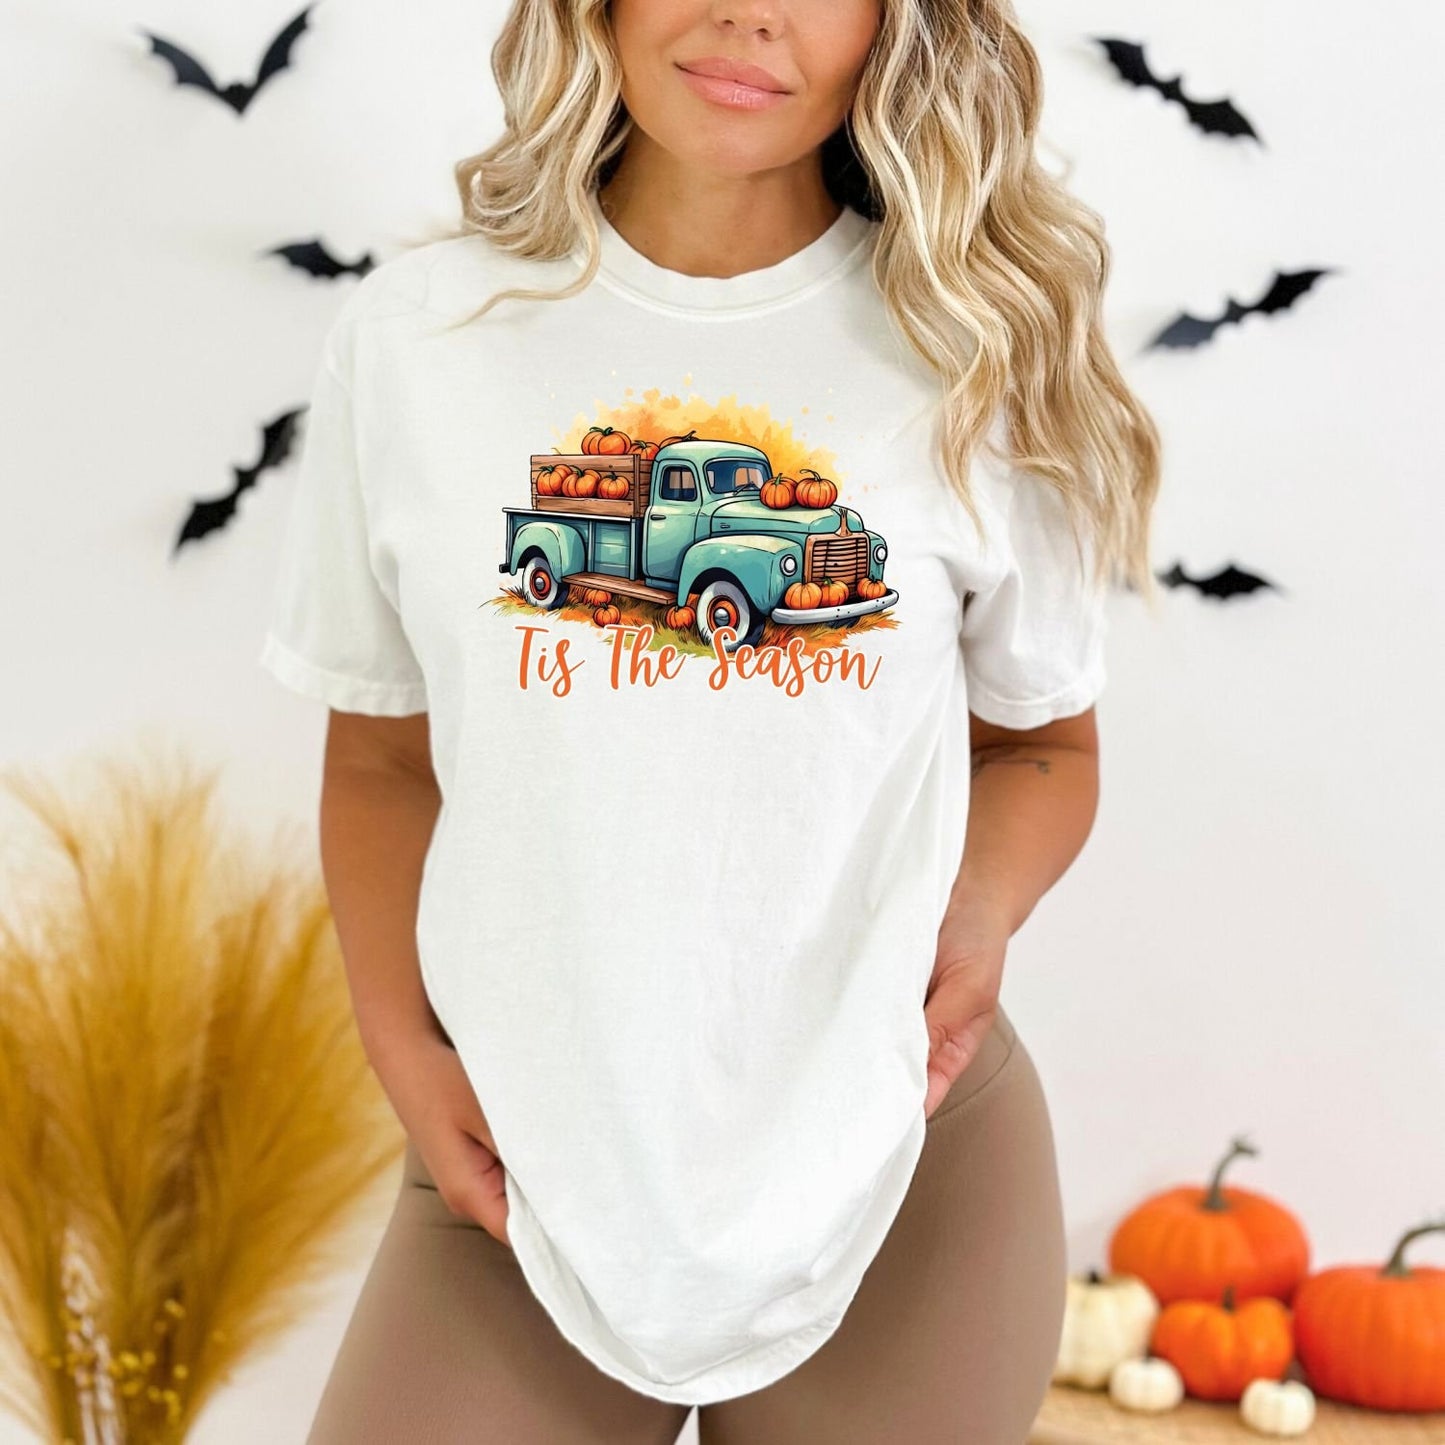 Thanksgiving Shirt for Women, Fall Shirt, Comfort Colors Thanksgiving Shirt, Plus Size Fall Shirt, Autumn Fall T-Shirt